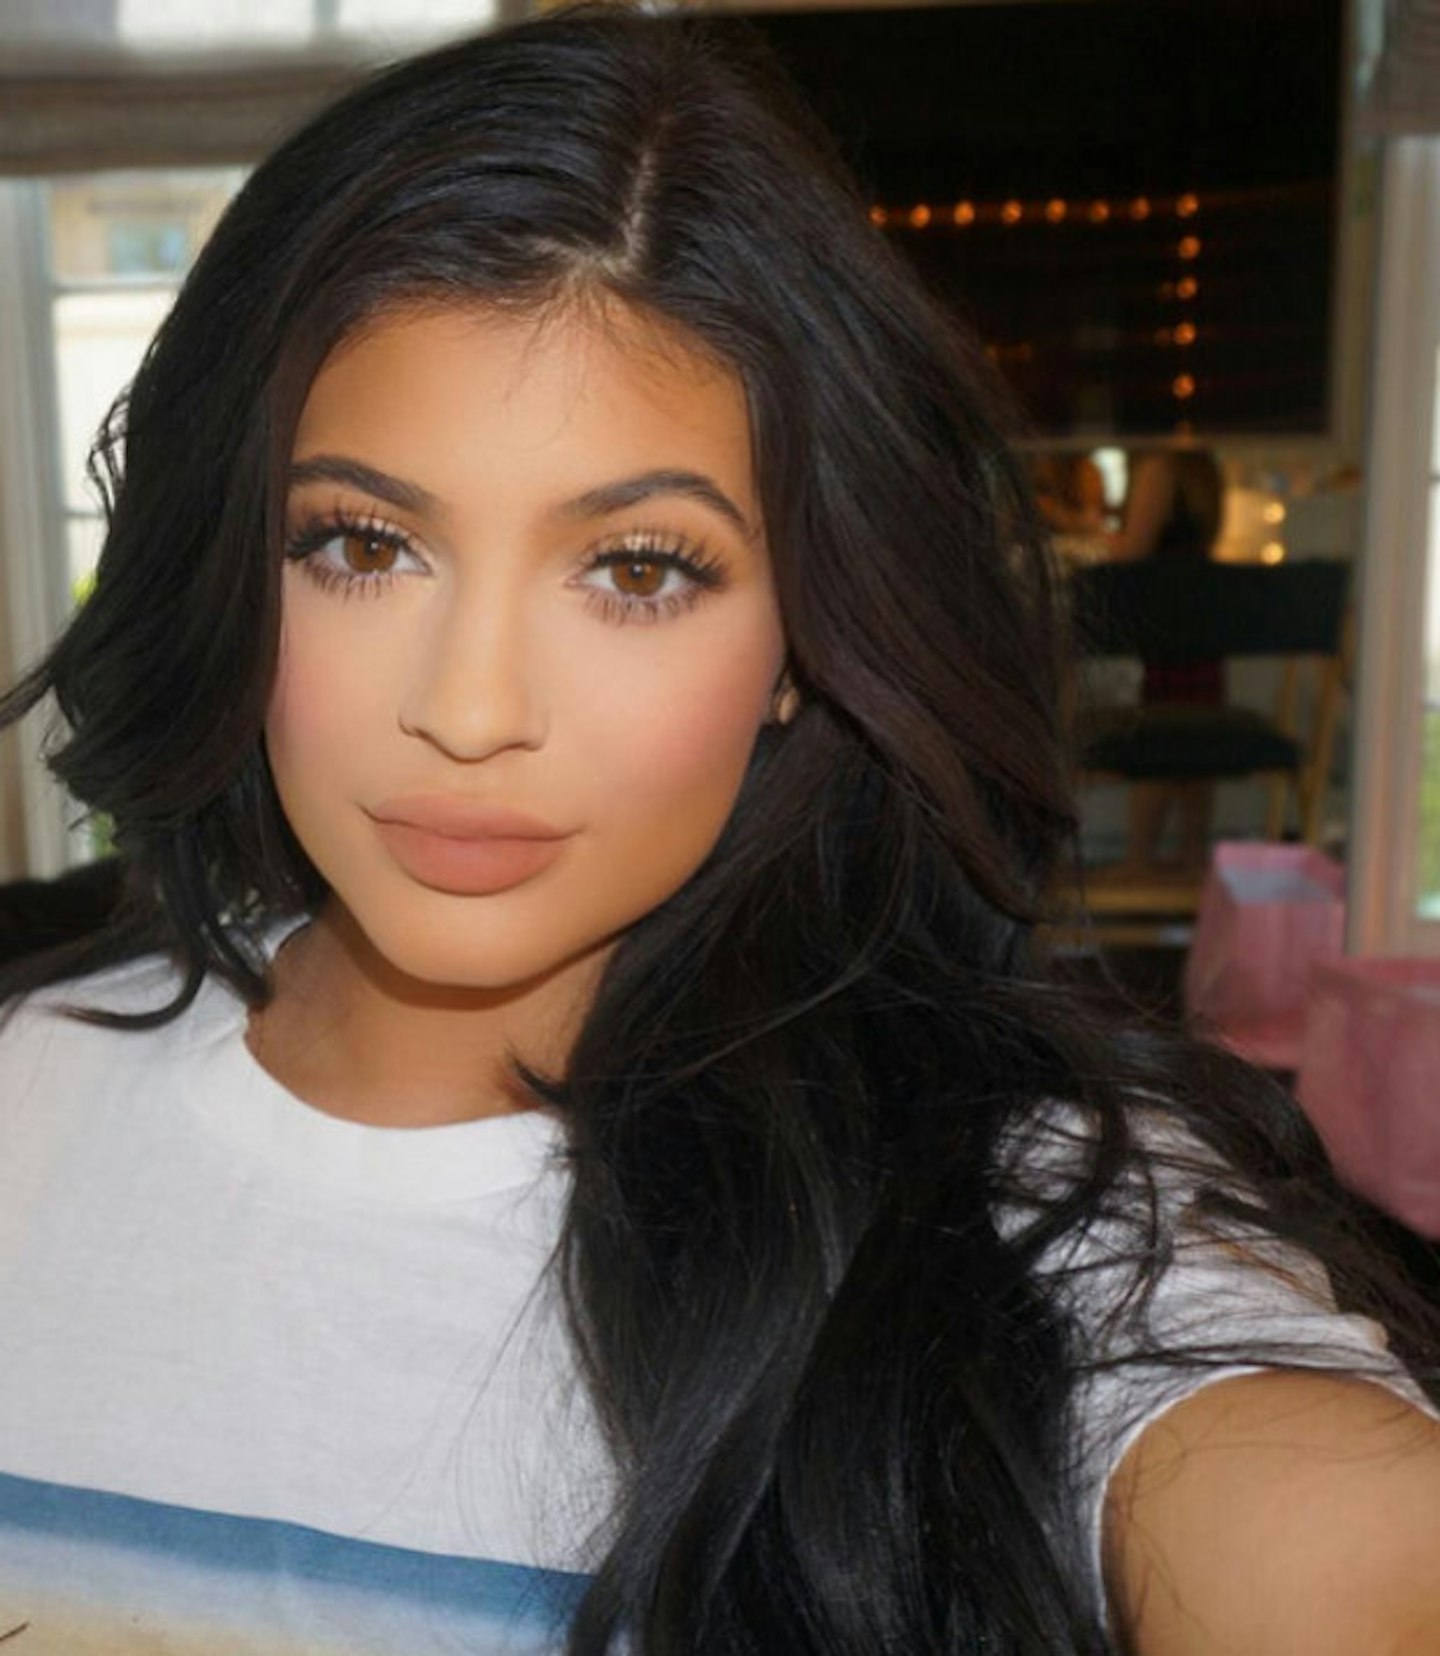 9 times Kylie Jenner went for no makeup makeup on Instagram